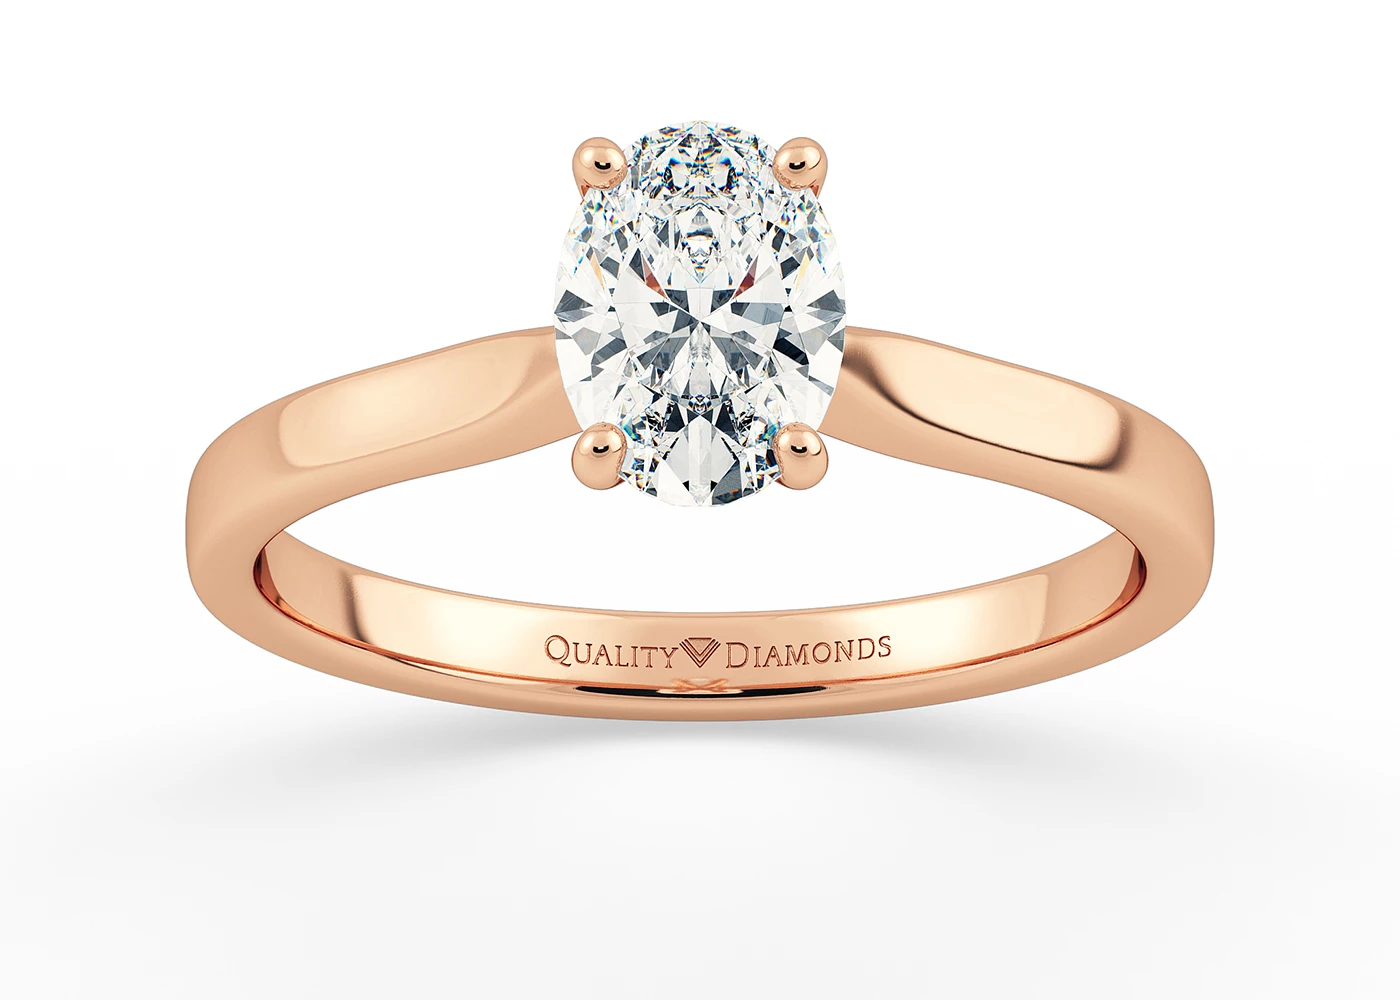 Oval Beau Diamond Ring in 9K Rose Gold